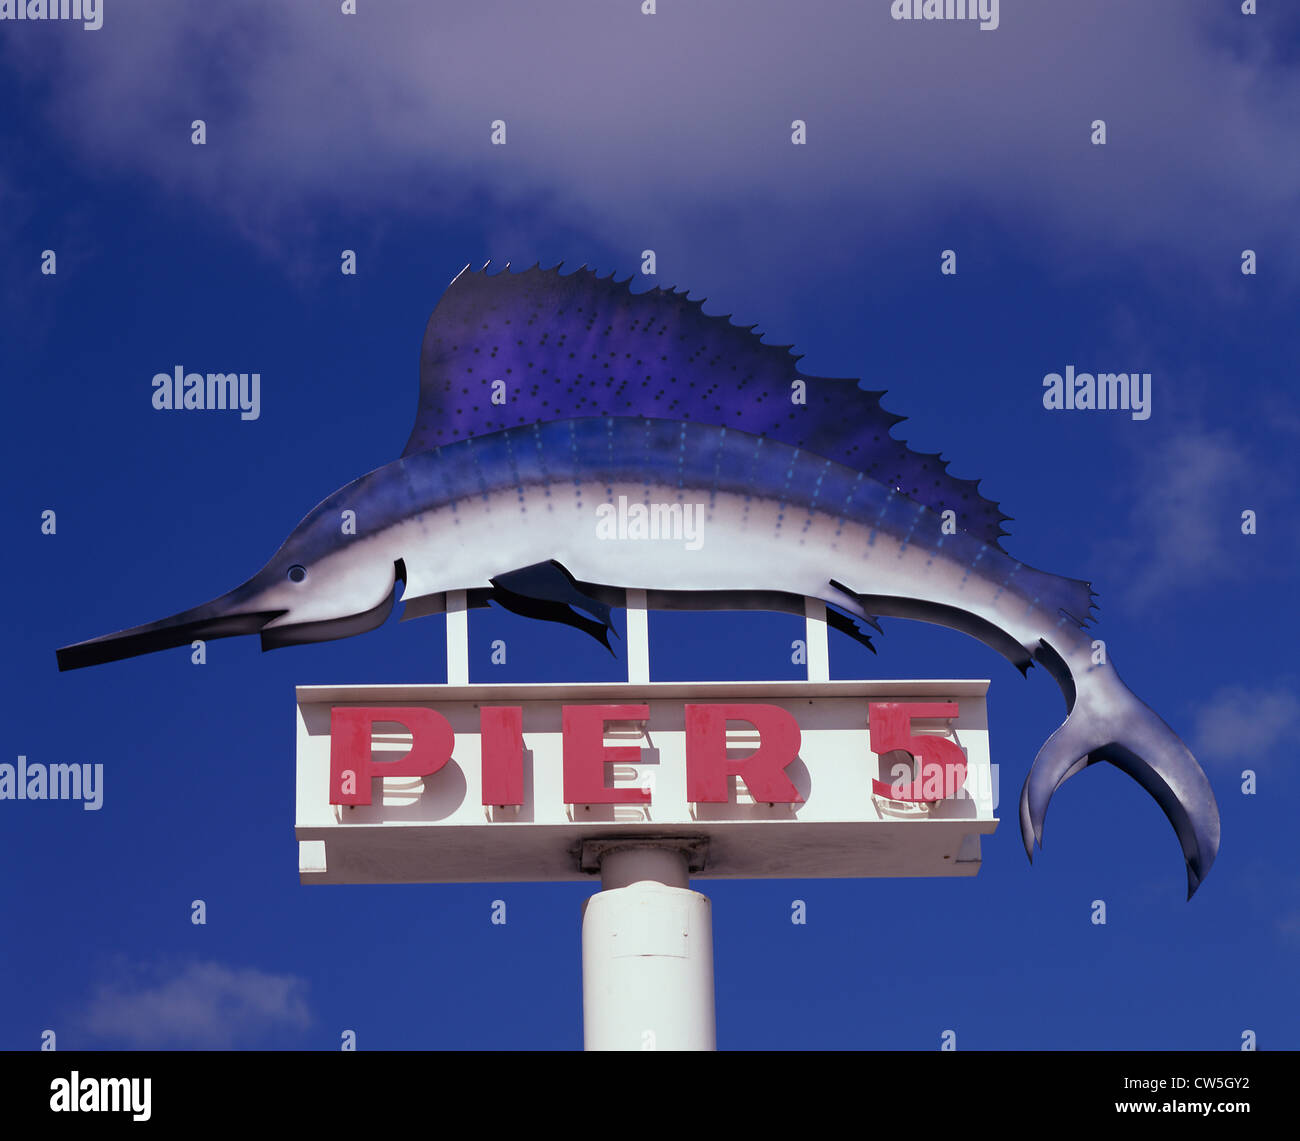 Low angle view of Pier 5 sign, Miami, Florida, USA Stock Photo